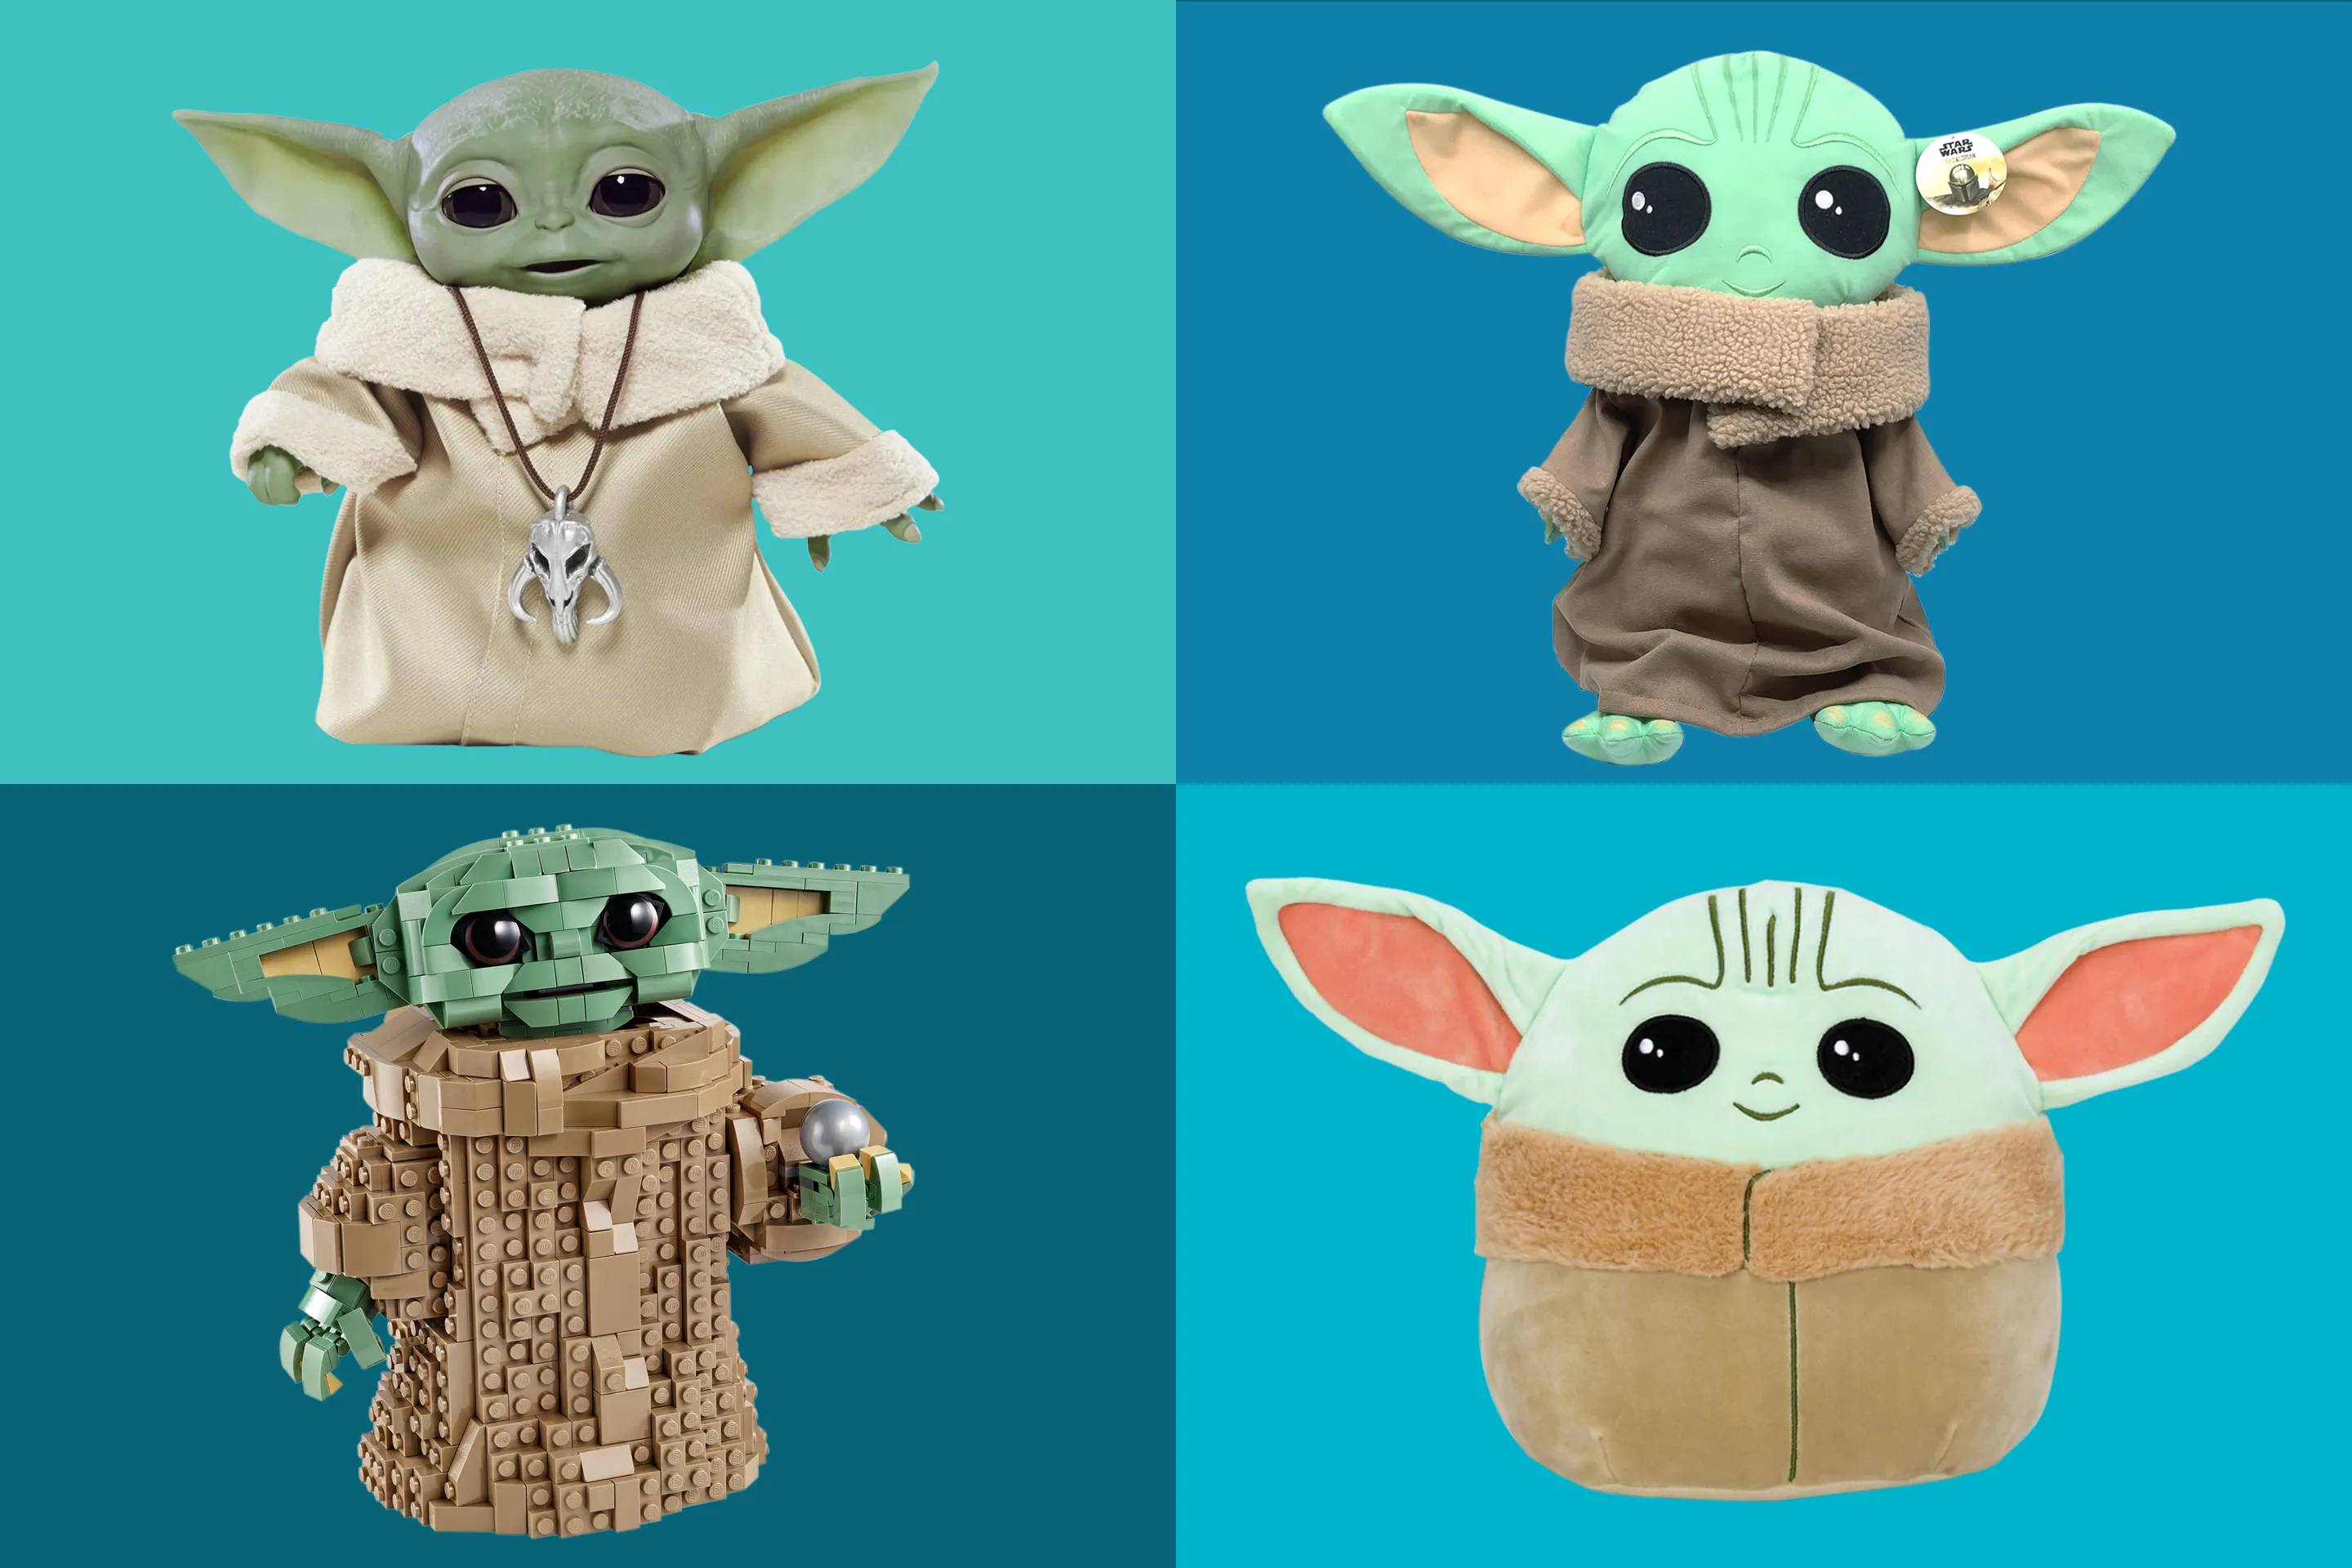 Baby Yoda Toys: Where to Get Baby Yoda Dolls, Legos in Stock